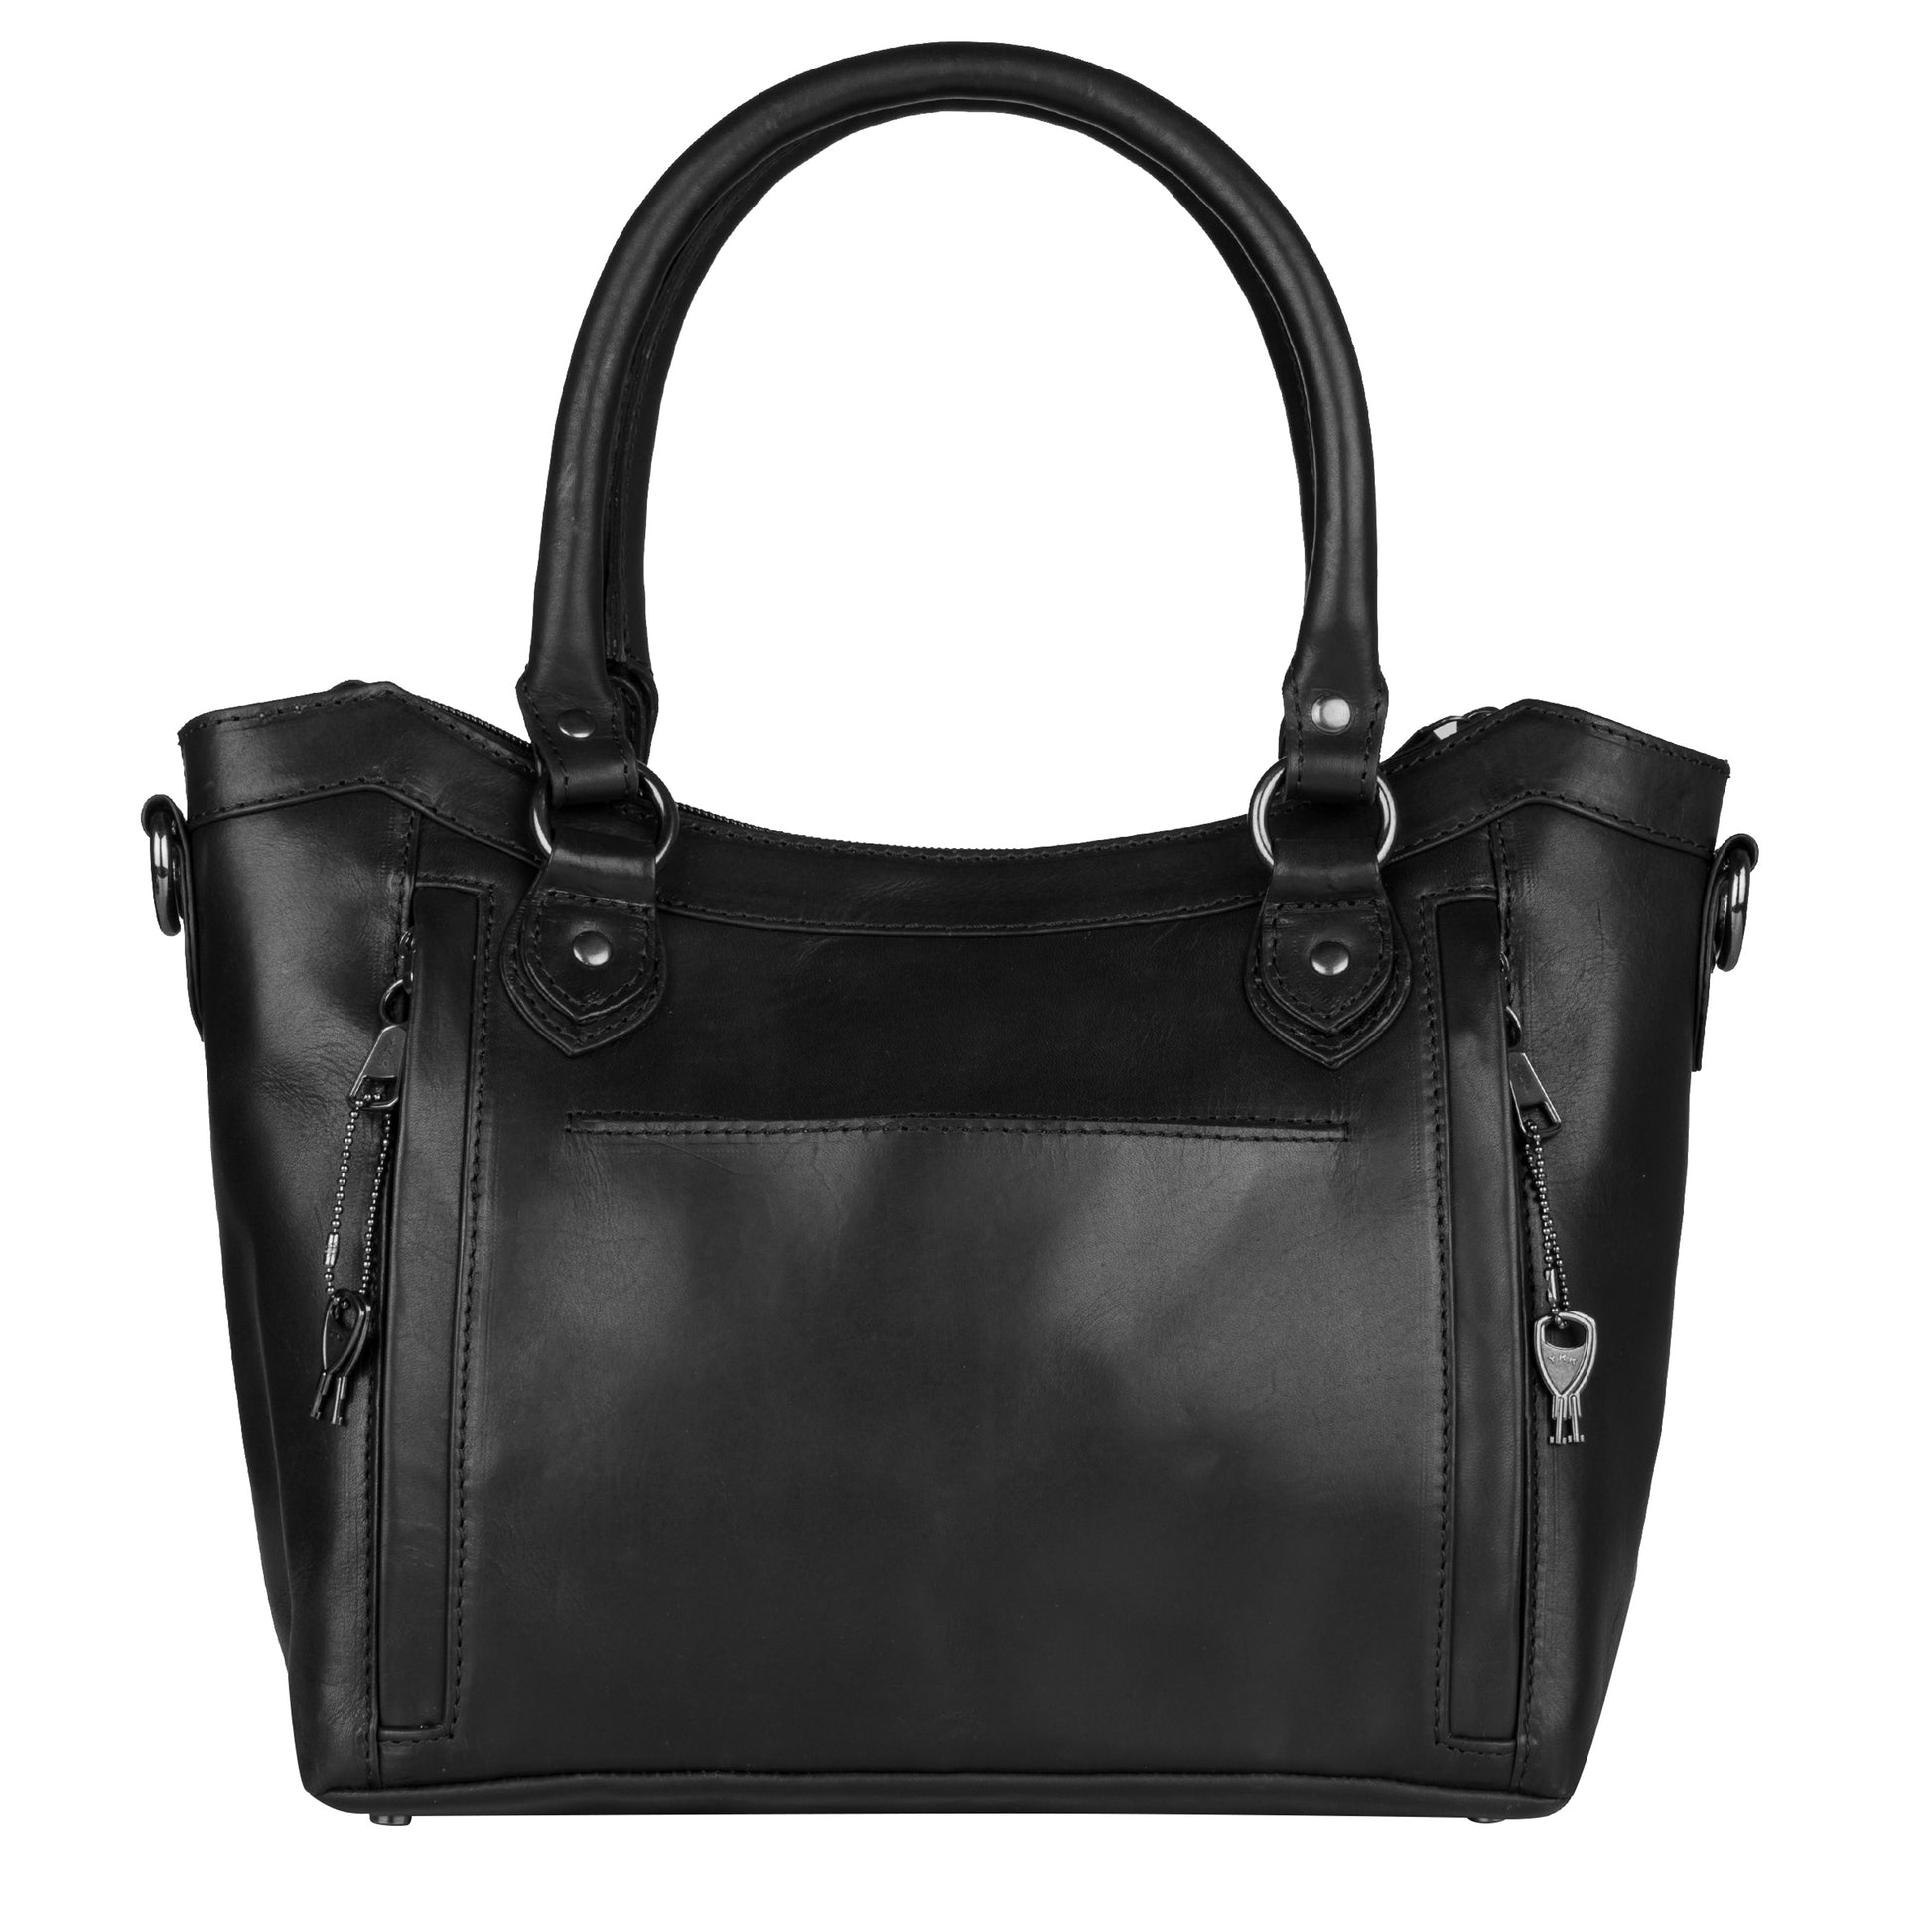 Authentic Calvin Klein shoulder purse, it's broken, - Depop